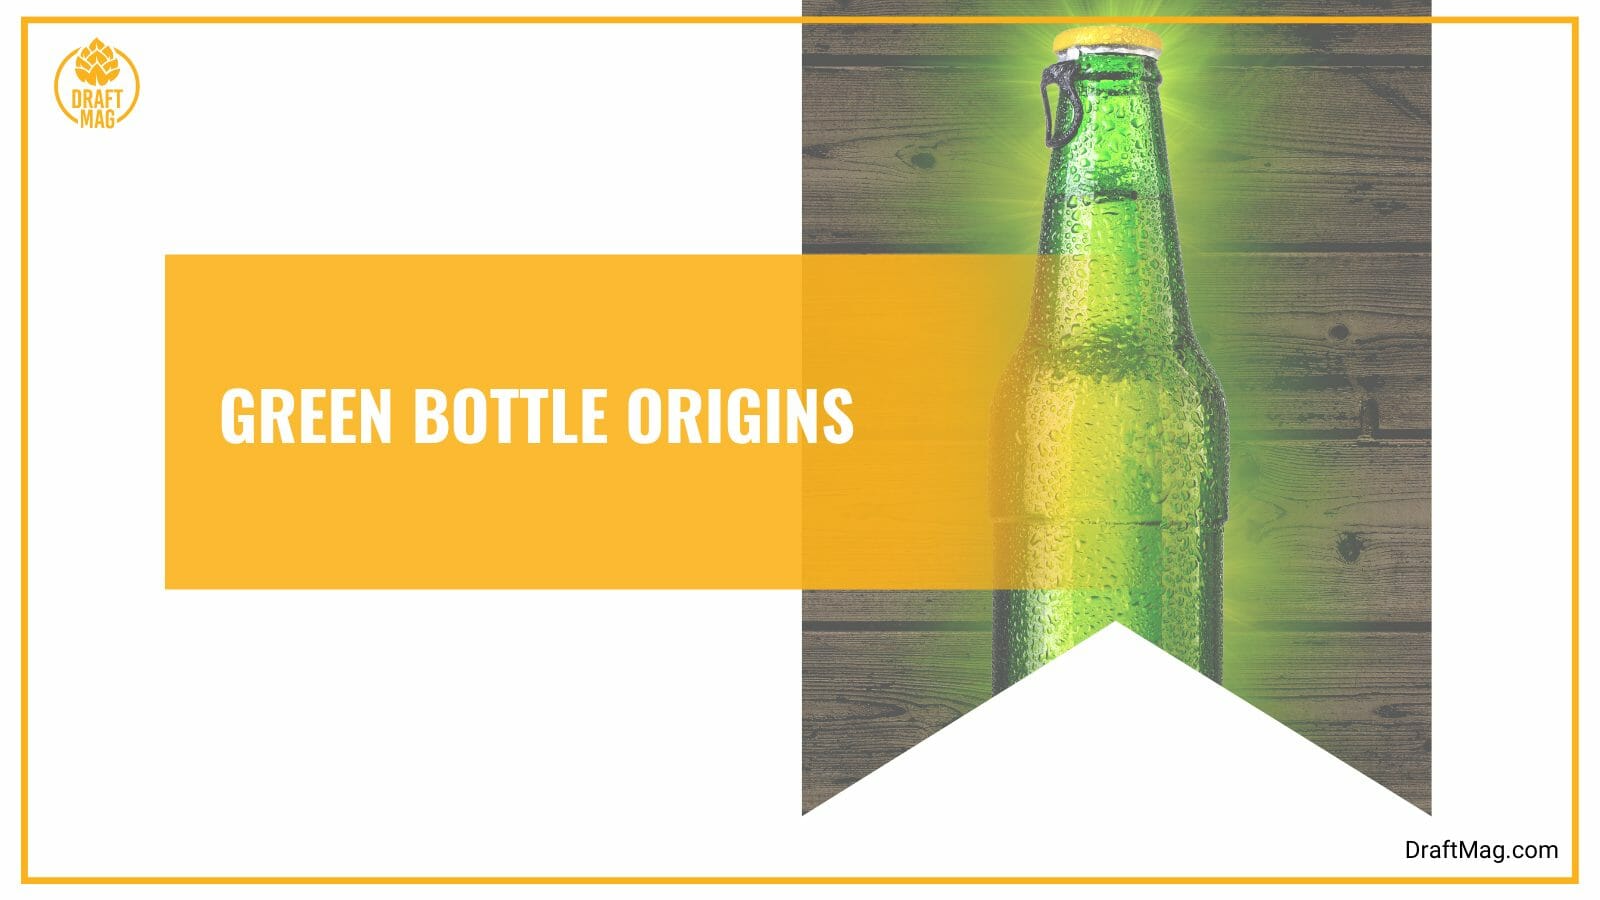 Green bottle origins